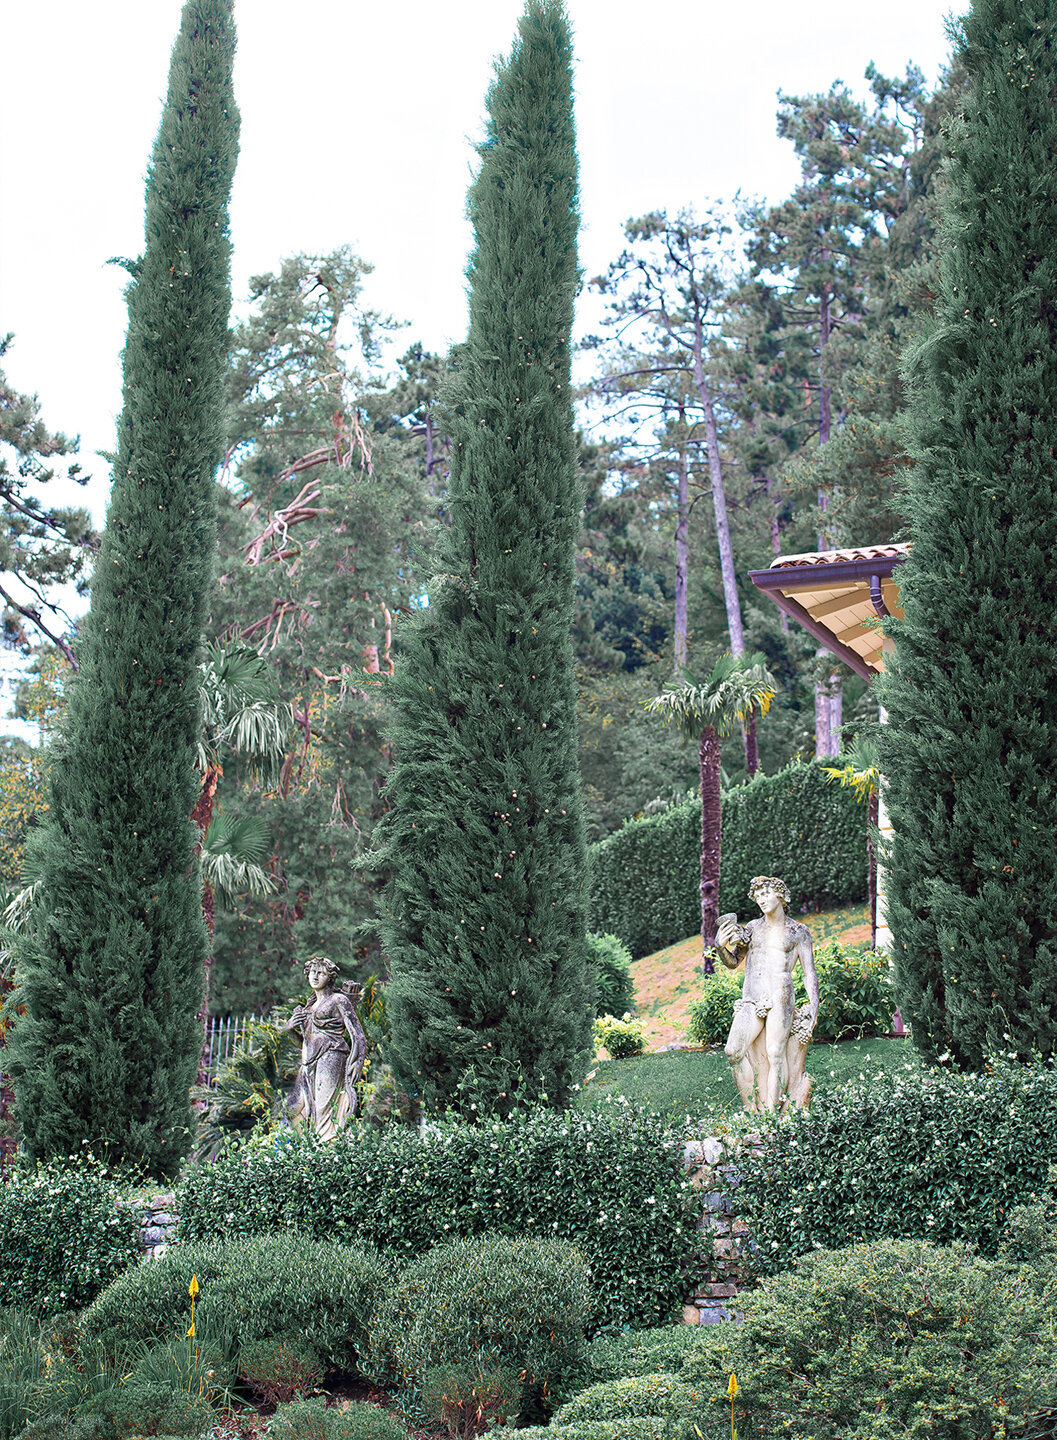 Villa del Balbianello park and sculptures